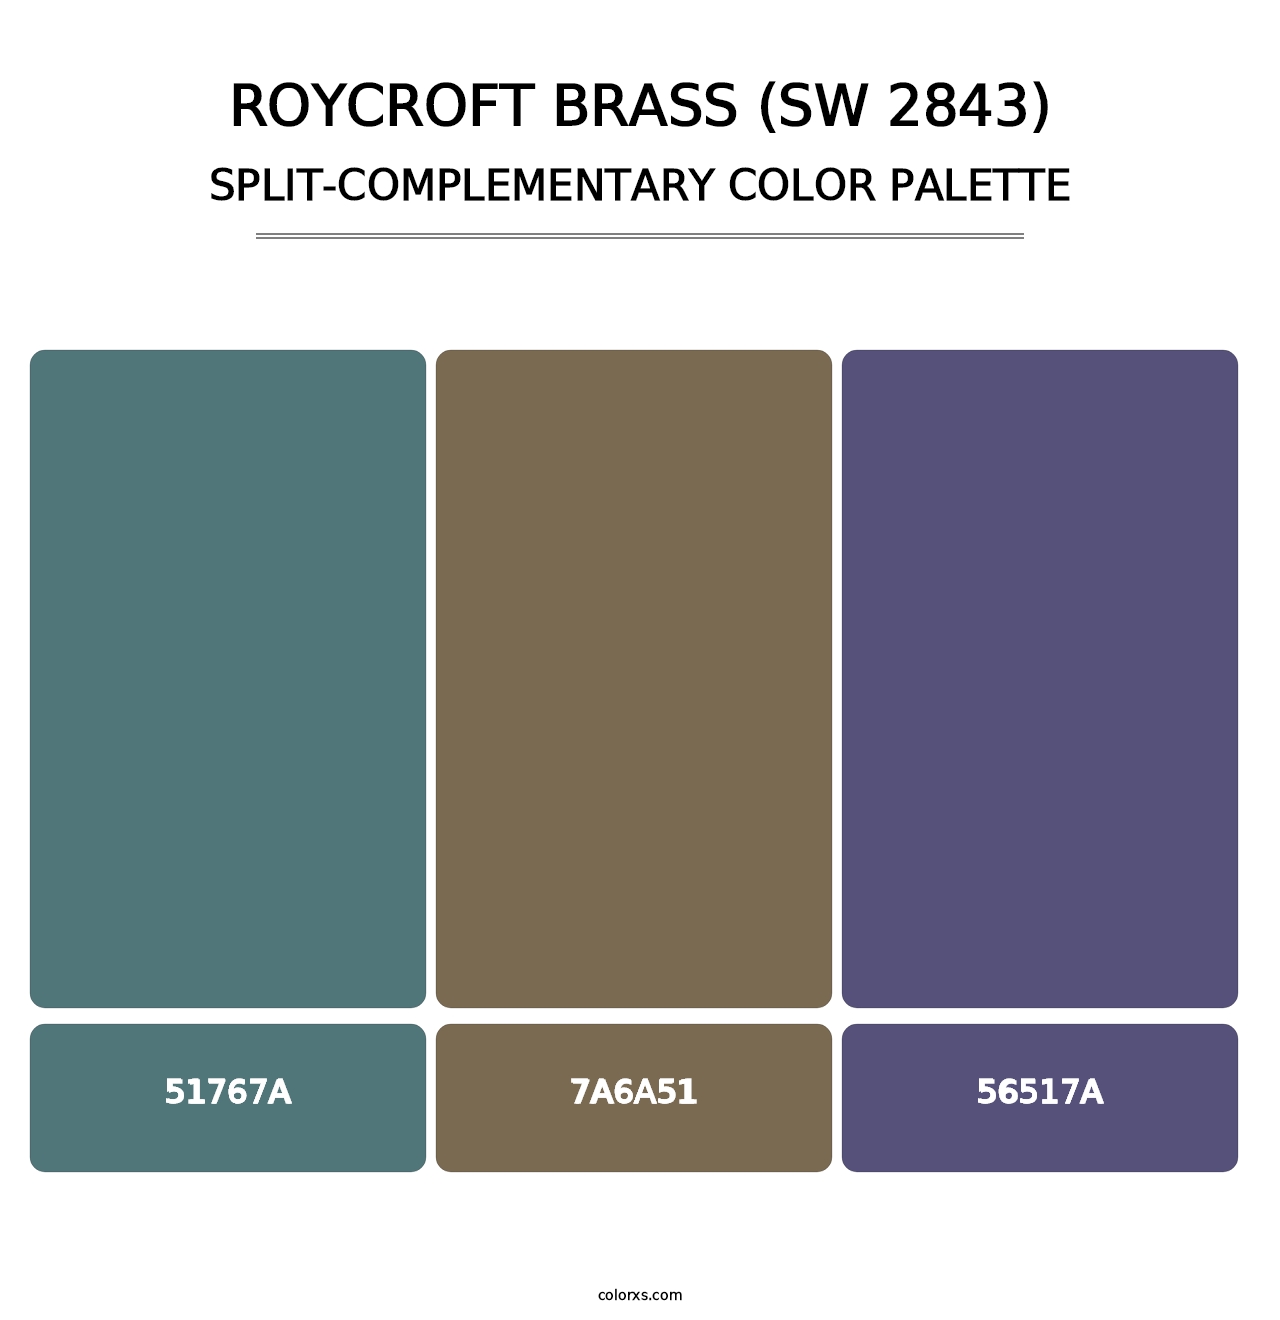 Roycroft Brass (SW 2843) - Split-Complementary Color Palette